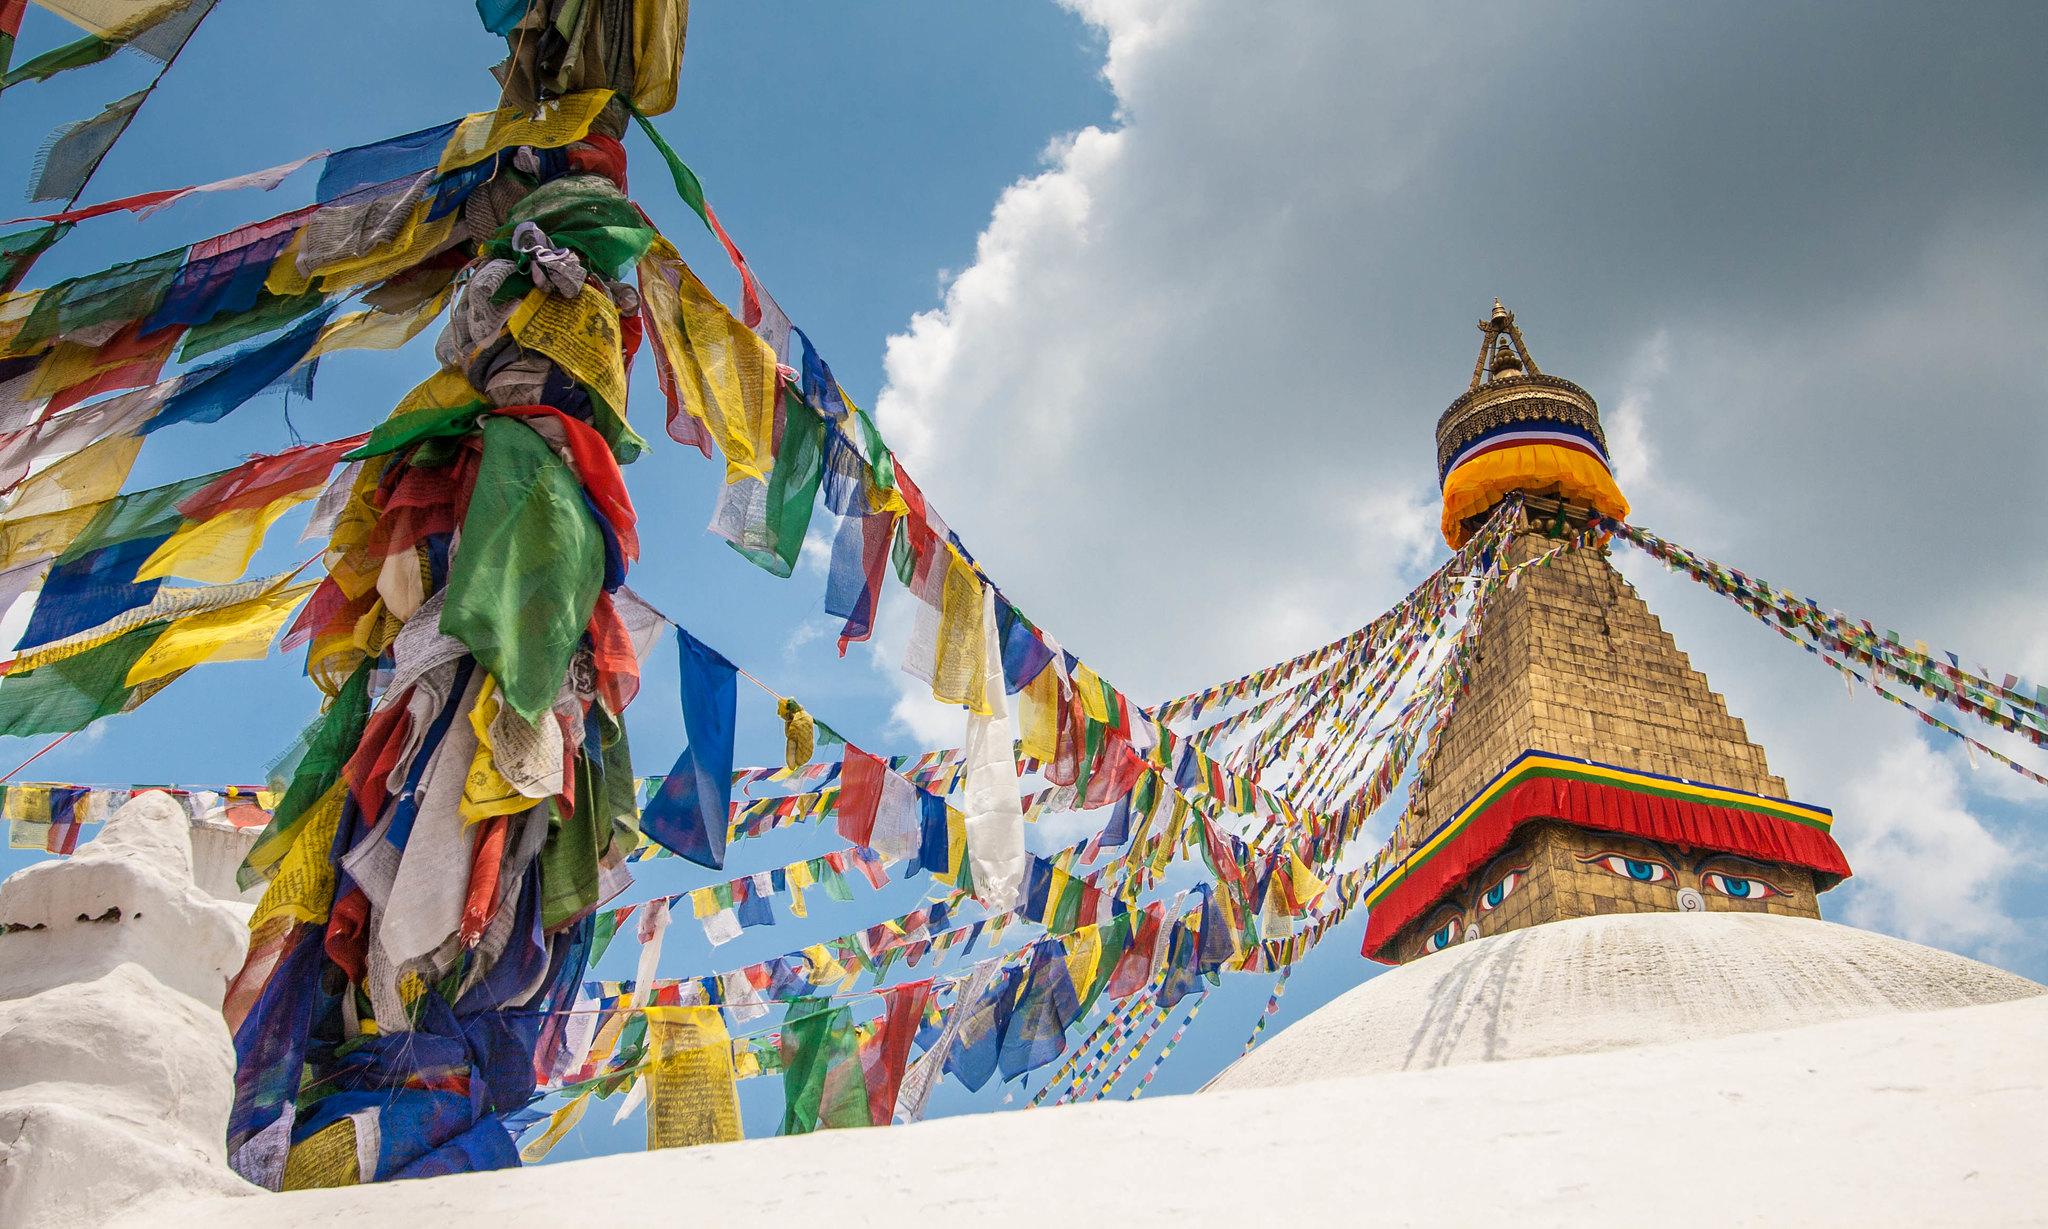 Ступа Будданатх в Катманду